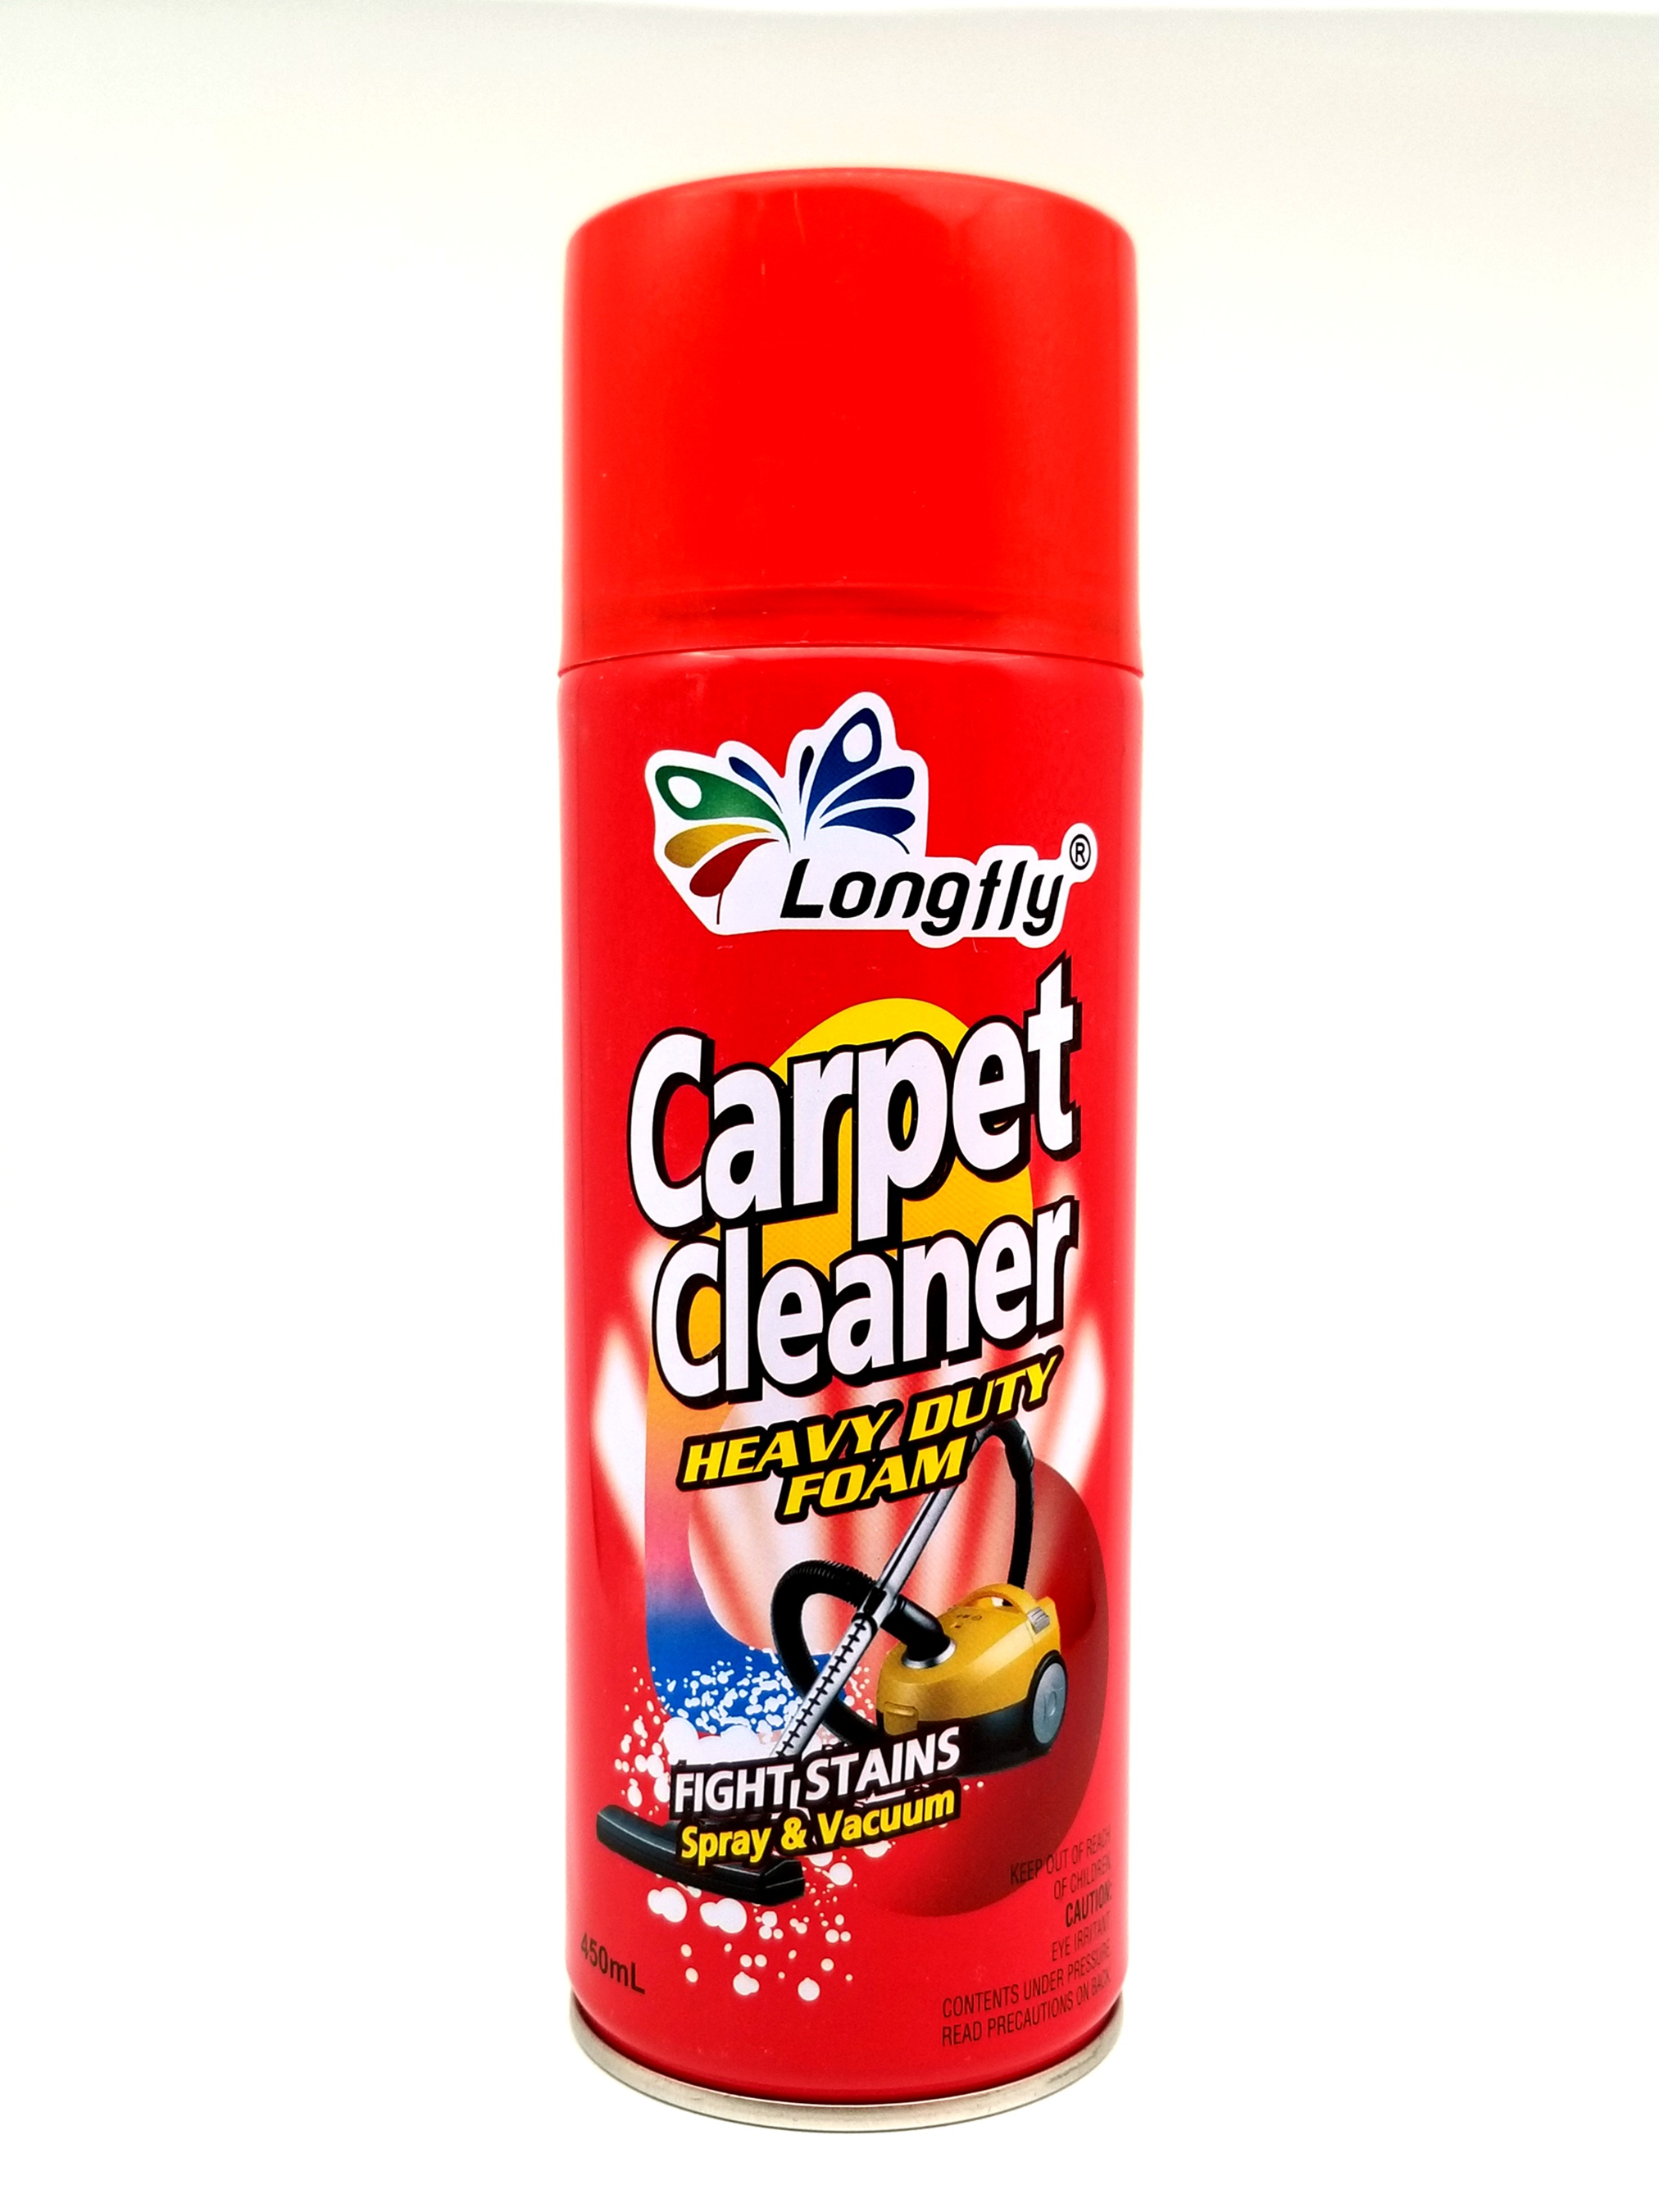 地毯清洁剂 carpet cleaner  家居用品